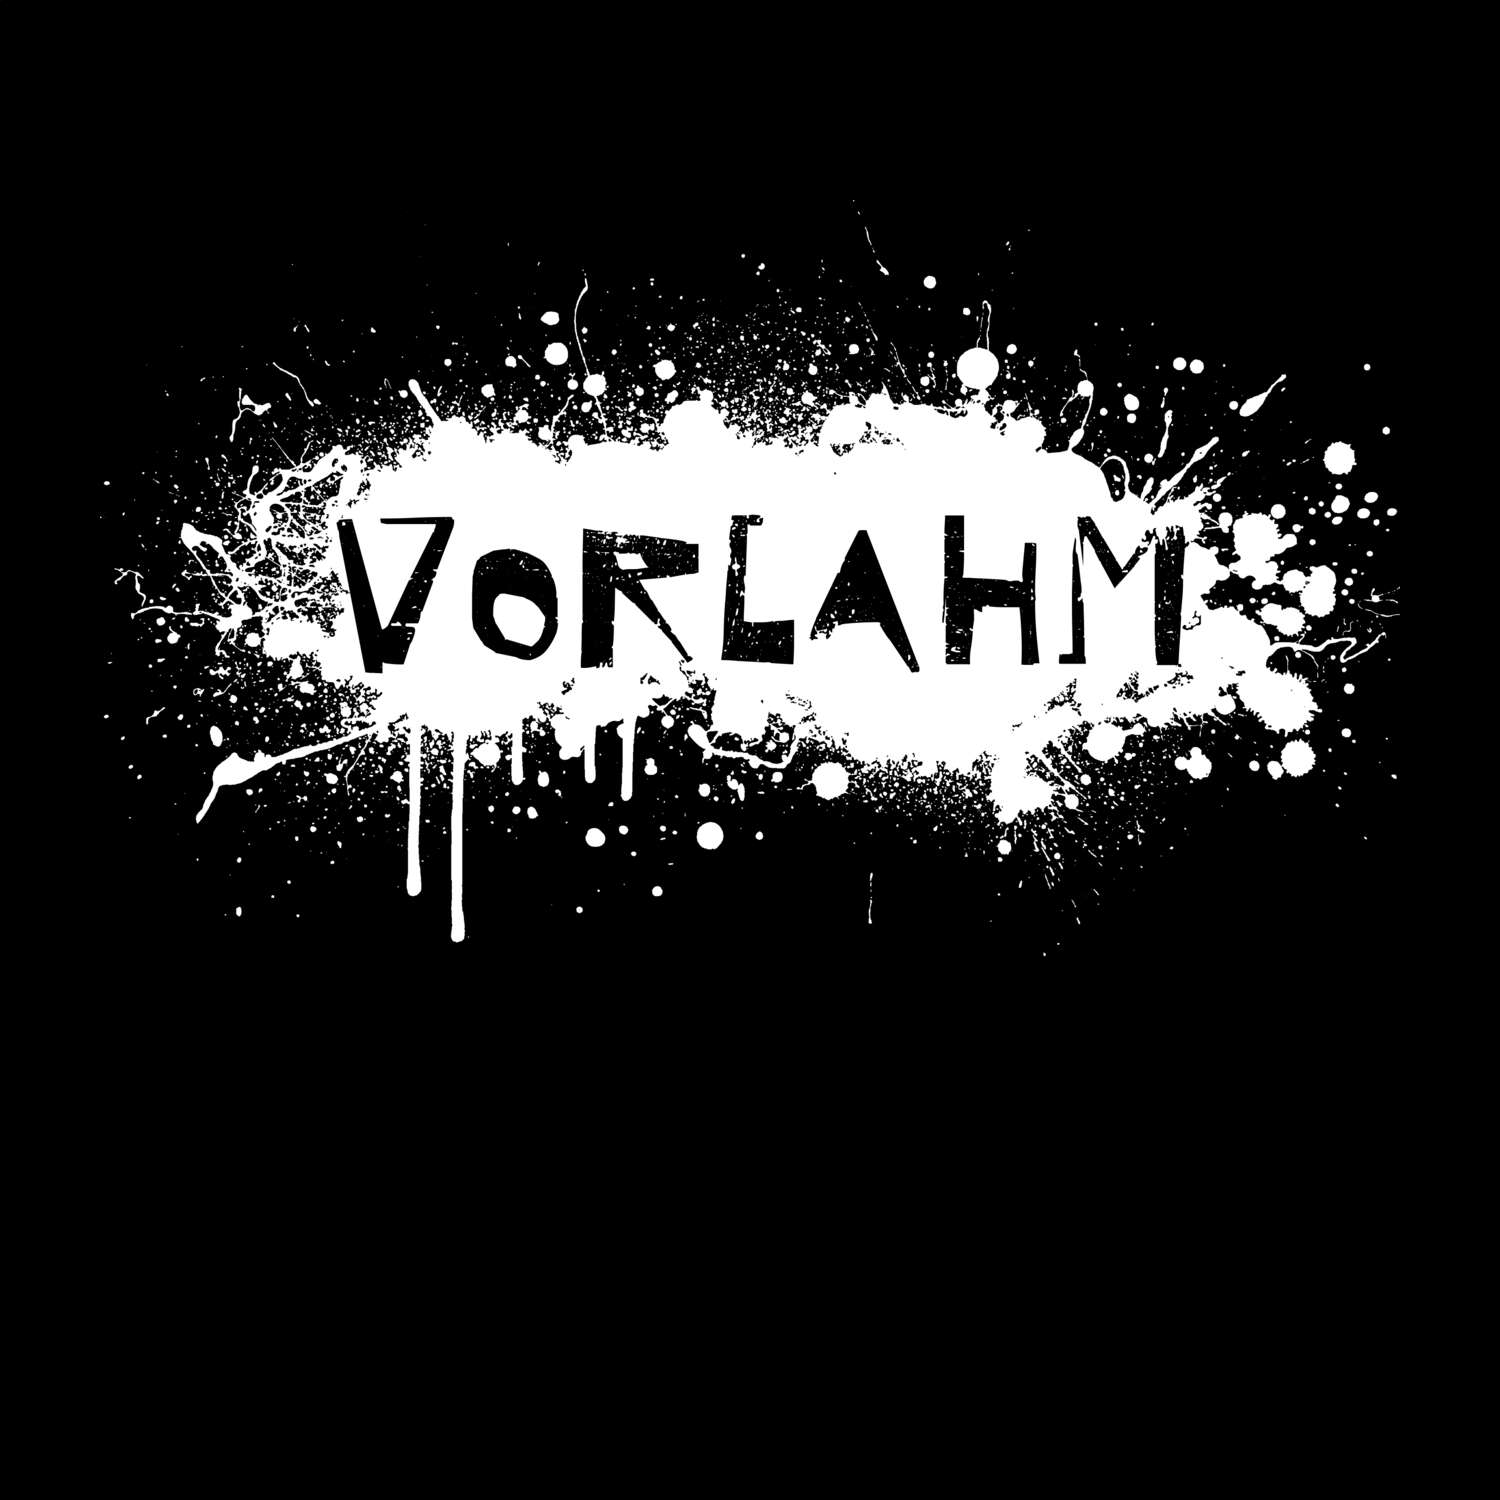 Vorlahm T-Shirt »Paint Splash Punk«